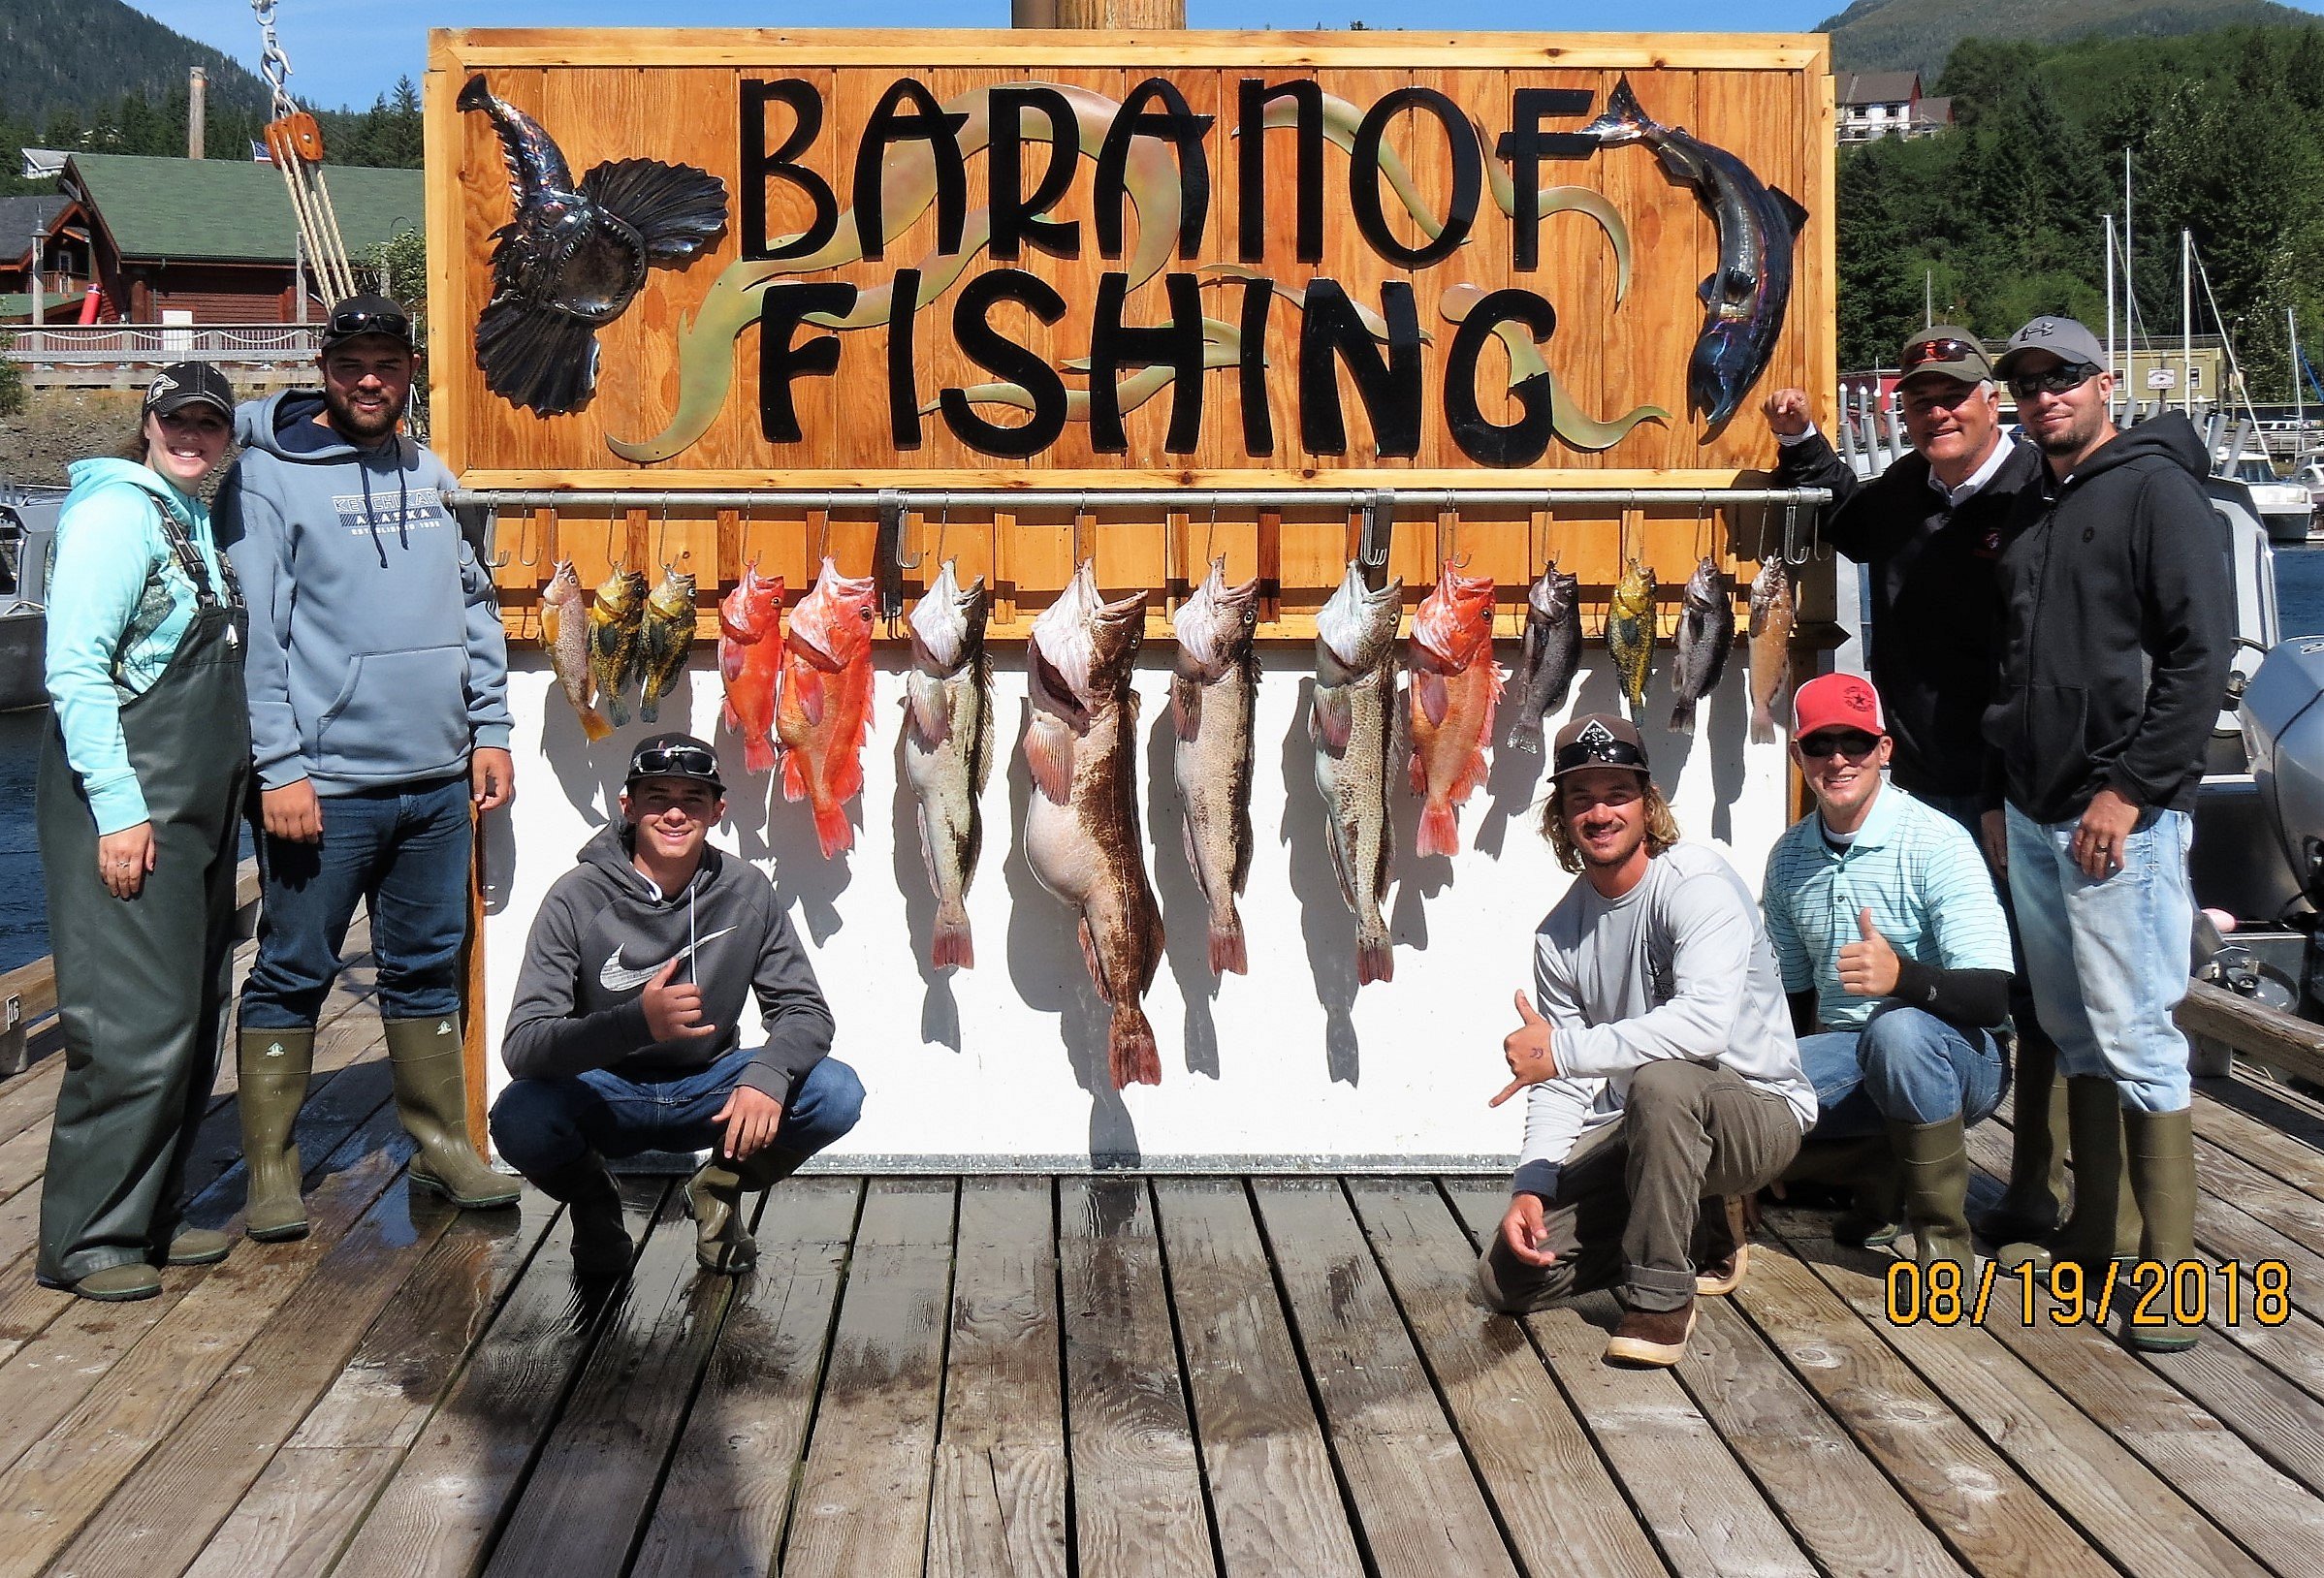 baranof fishing excursions reviews